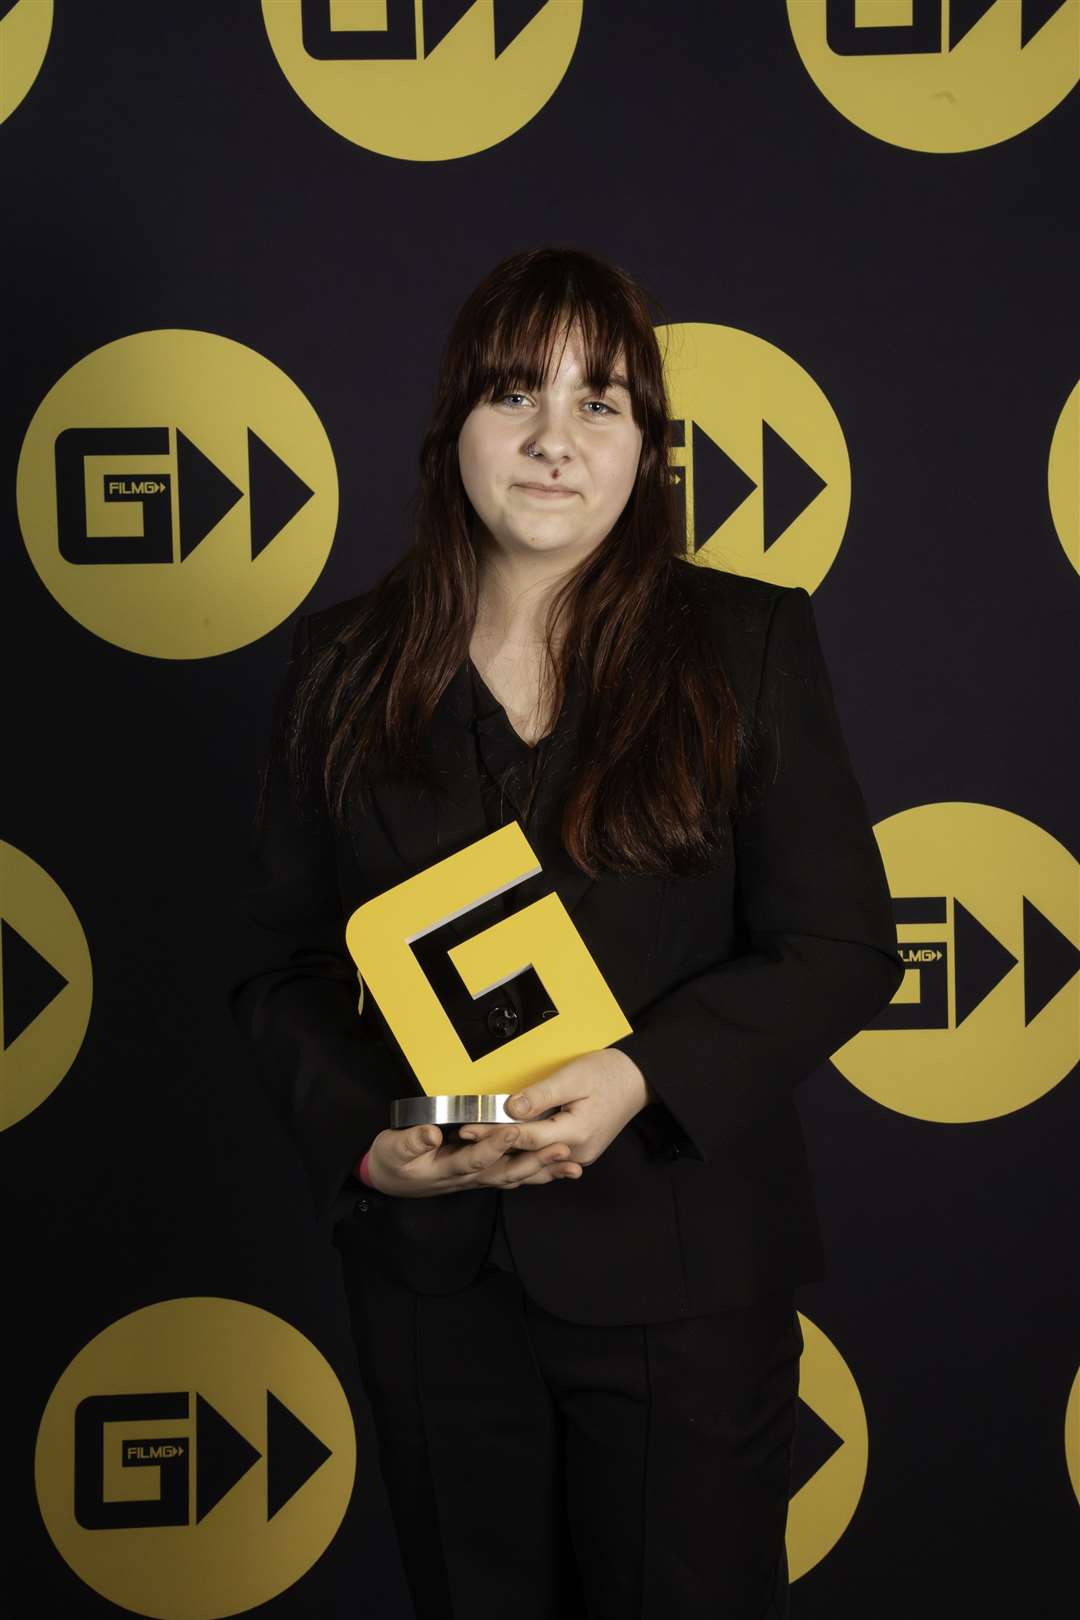 Jasmine Krzyzanowska-Pawlak from Inverness has won the Rionnag (Star Award) in the under-18 category. Photo: FilmG awards